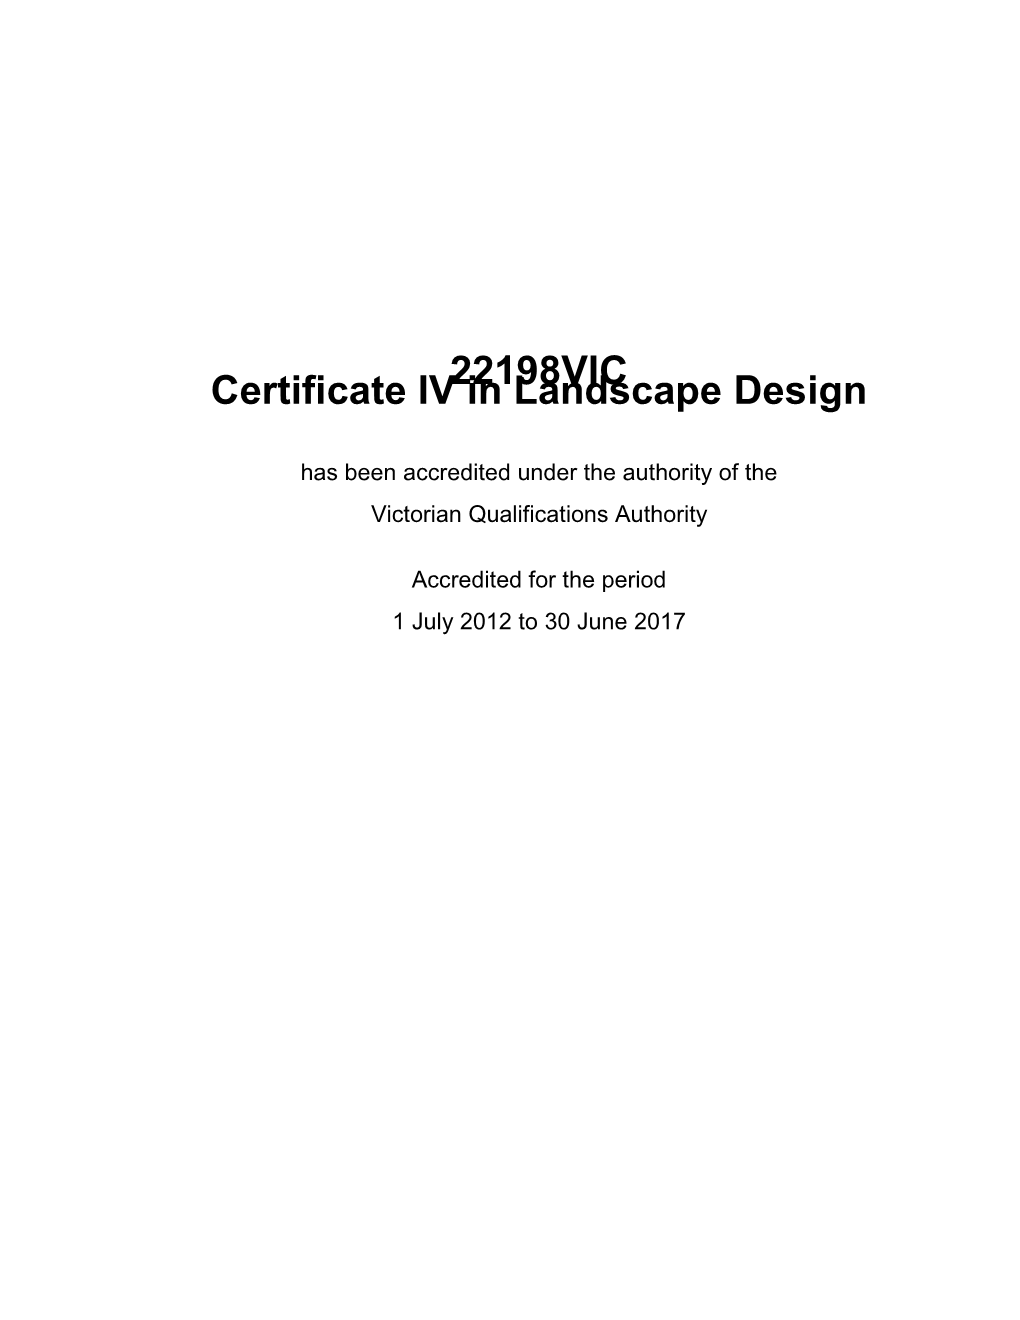 Certificate IV in Landscape Design 22198VIC